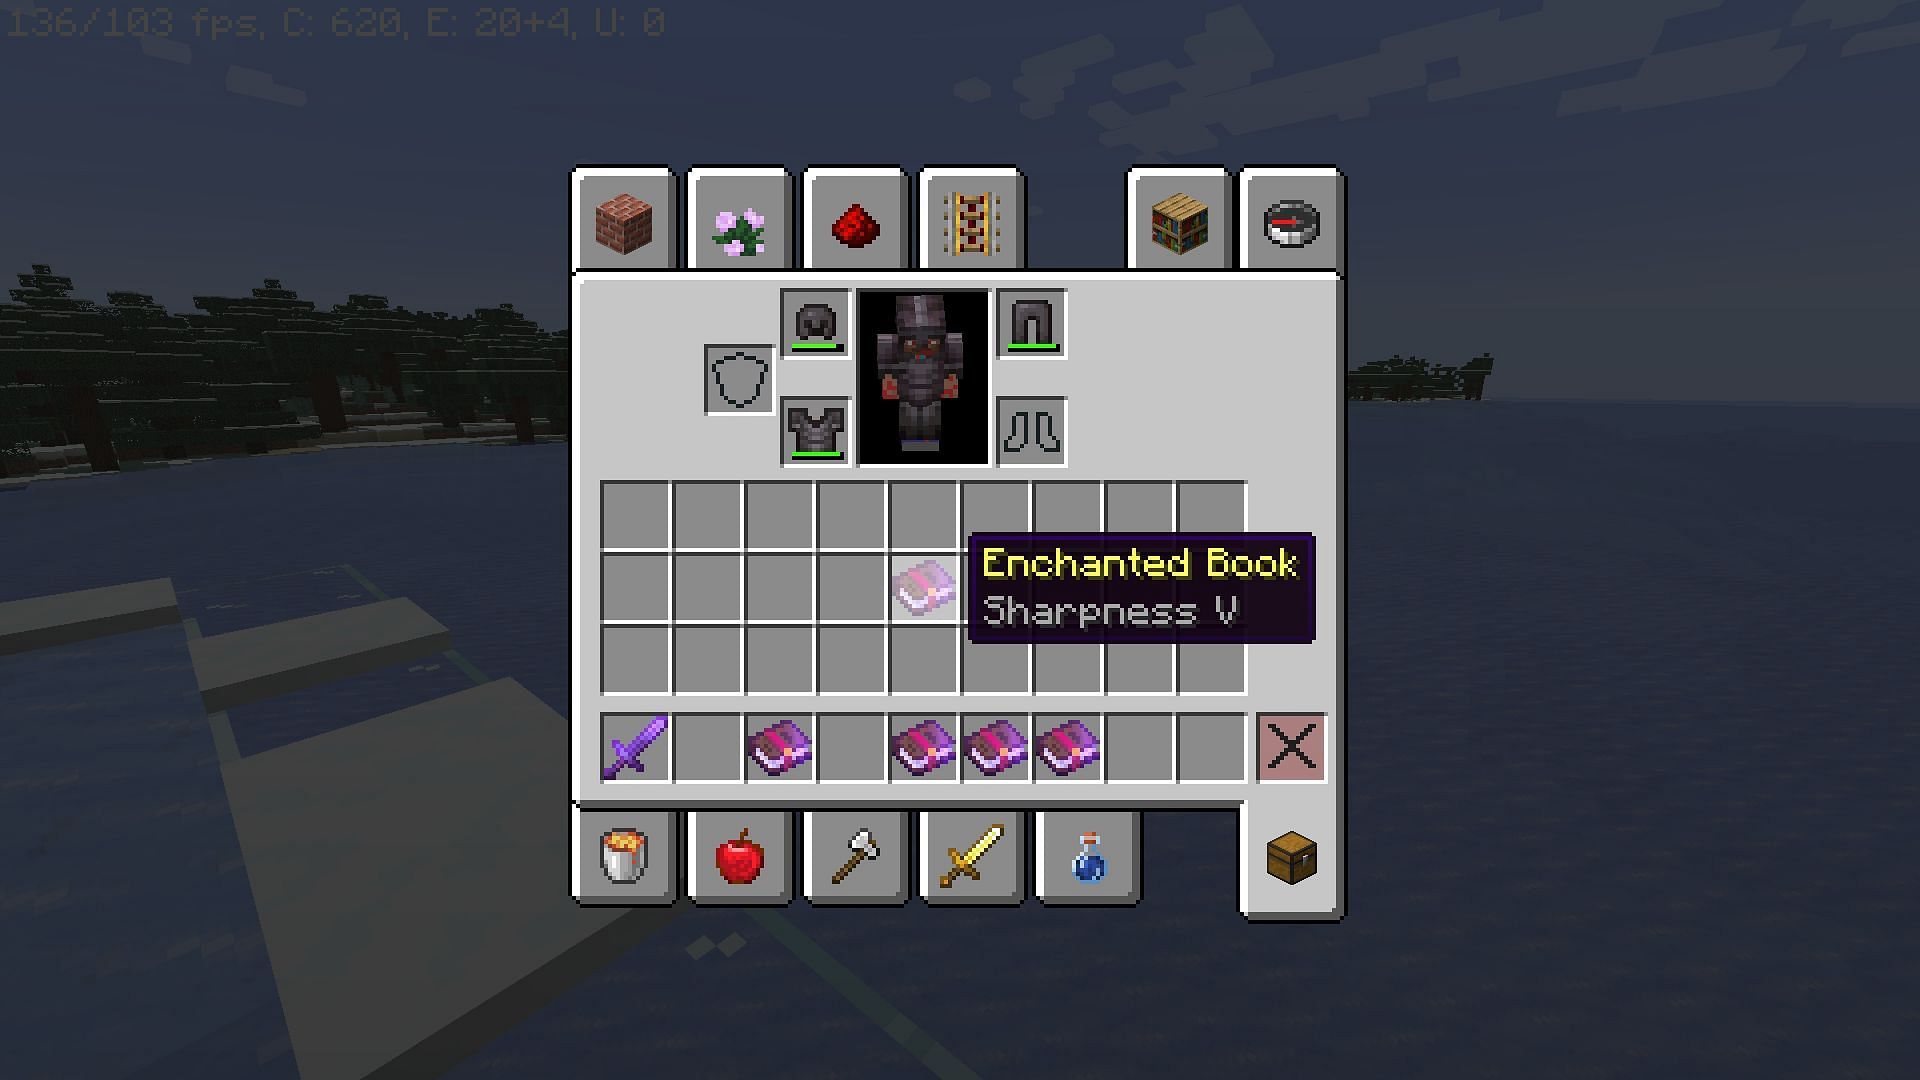 Sharpness 5 enchanted book (Image via Minecraft)